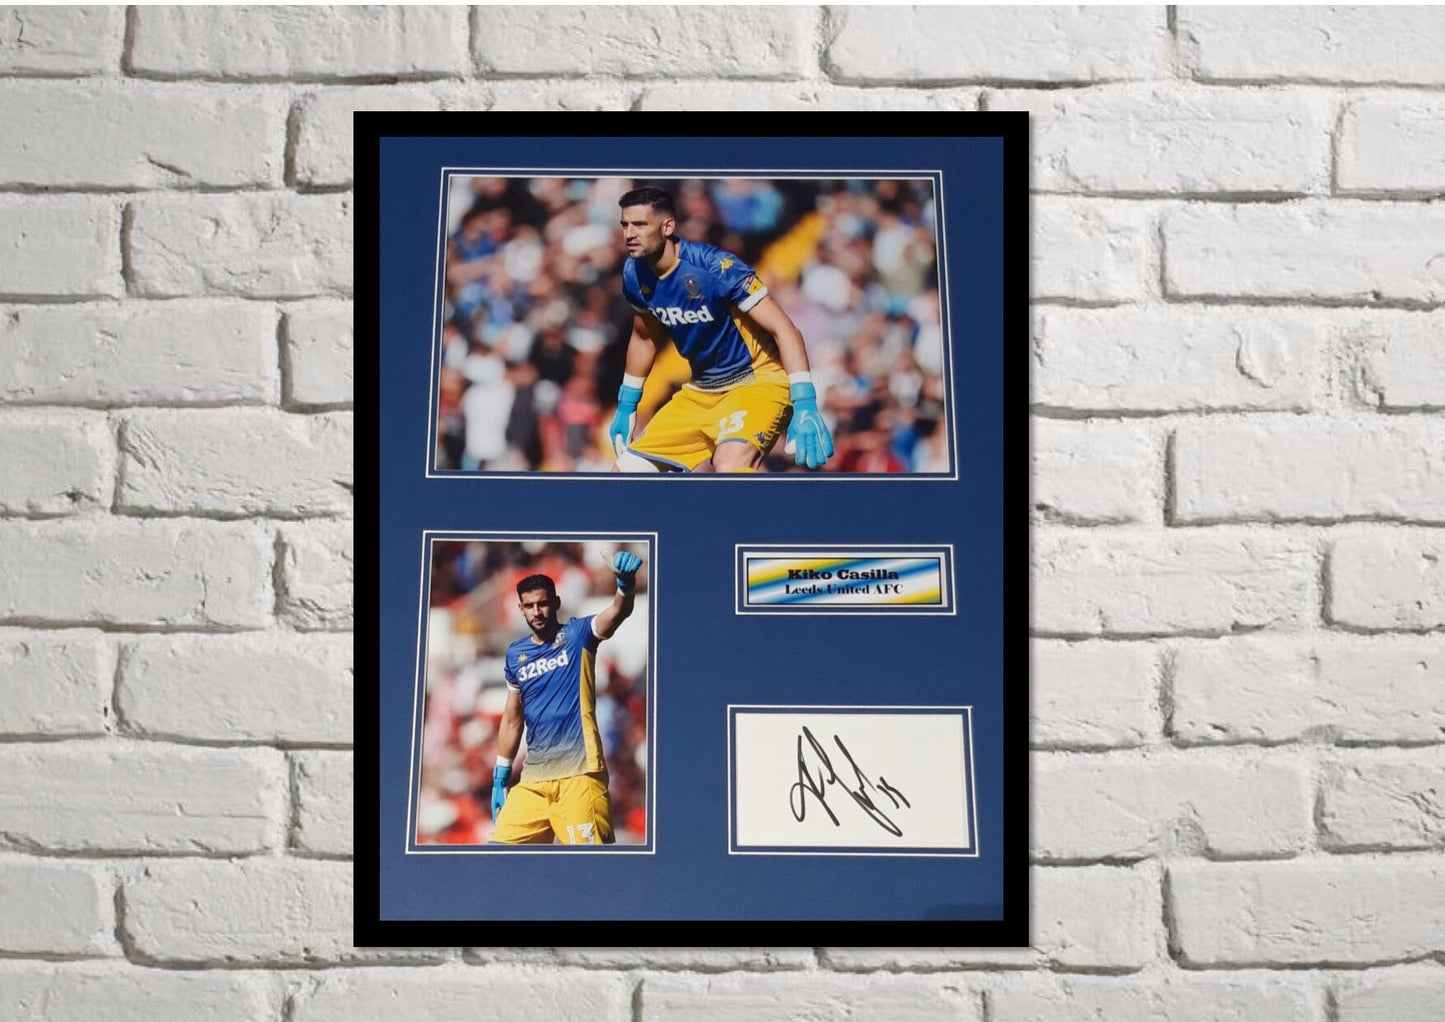 Kiko Casilla - Leeds United AFC - 20x16in signed photo montage - Leeds United memorabilia, gift, display